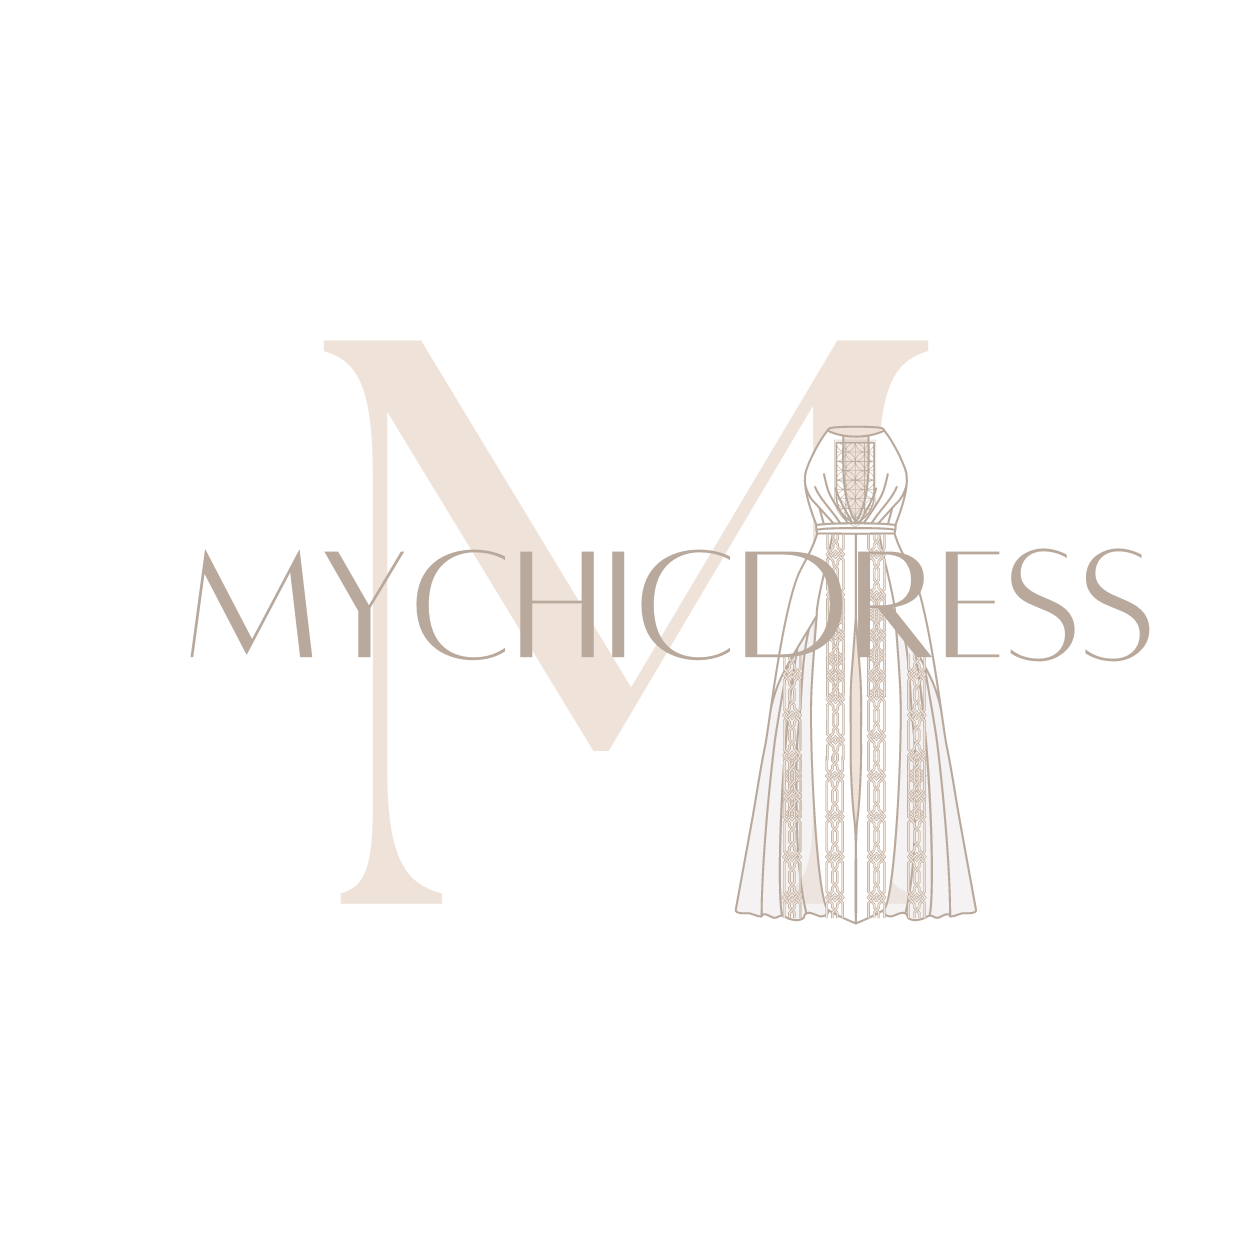 My Chic Dress logo